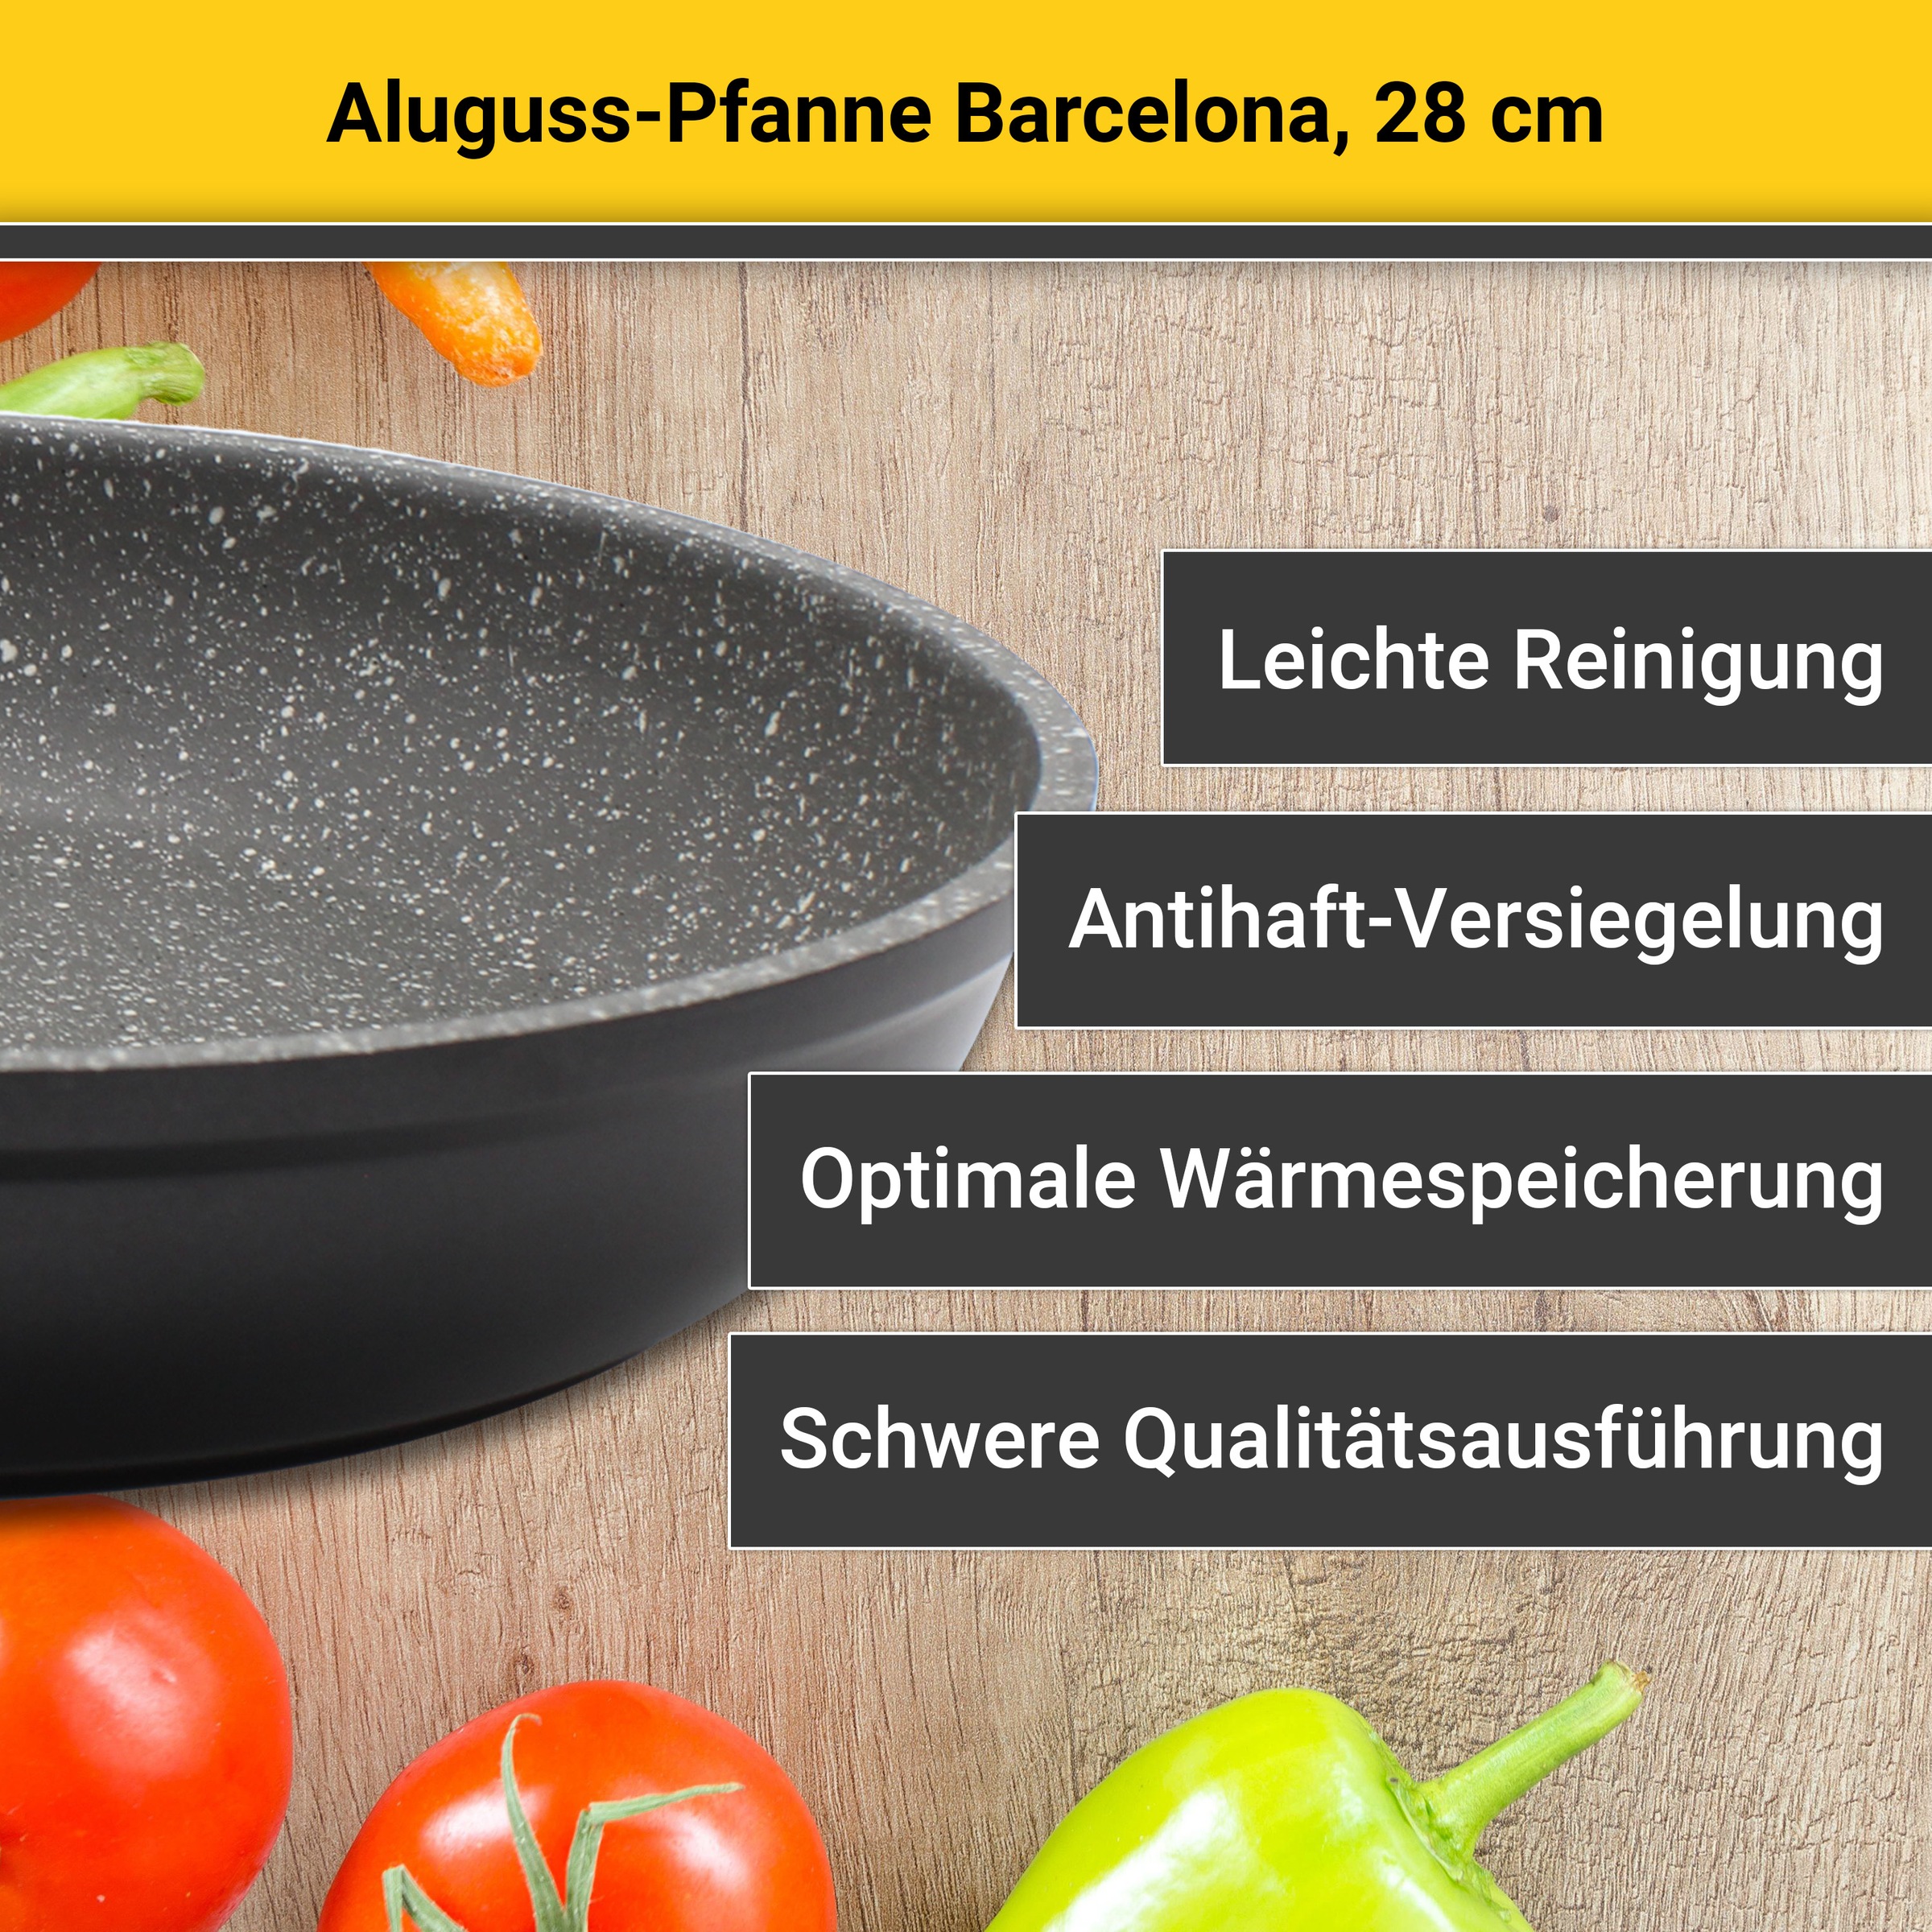 Krüger Bratpfanne »Aluguss Pfanne Bacelona«, Aluminiumguss, (1 tlg.), für Induktions-Kochfelder geeignet